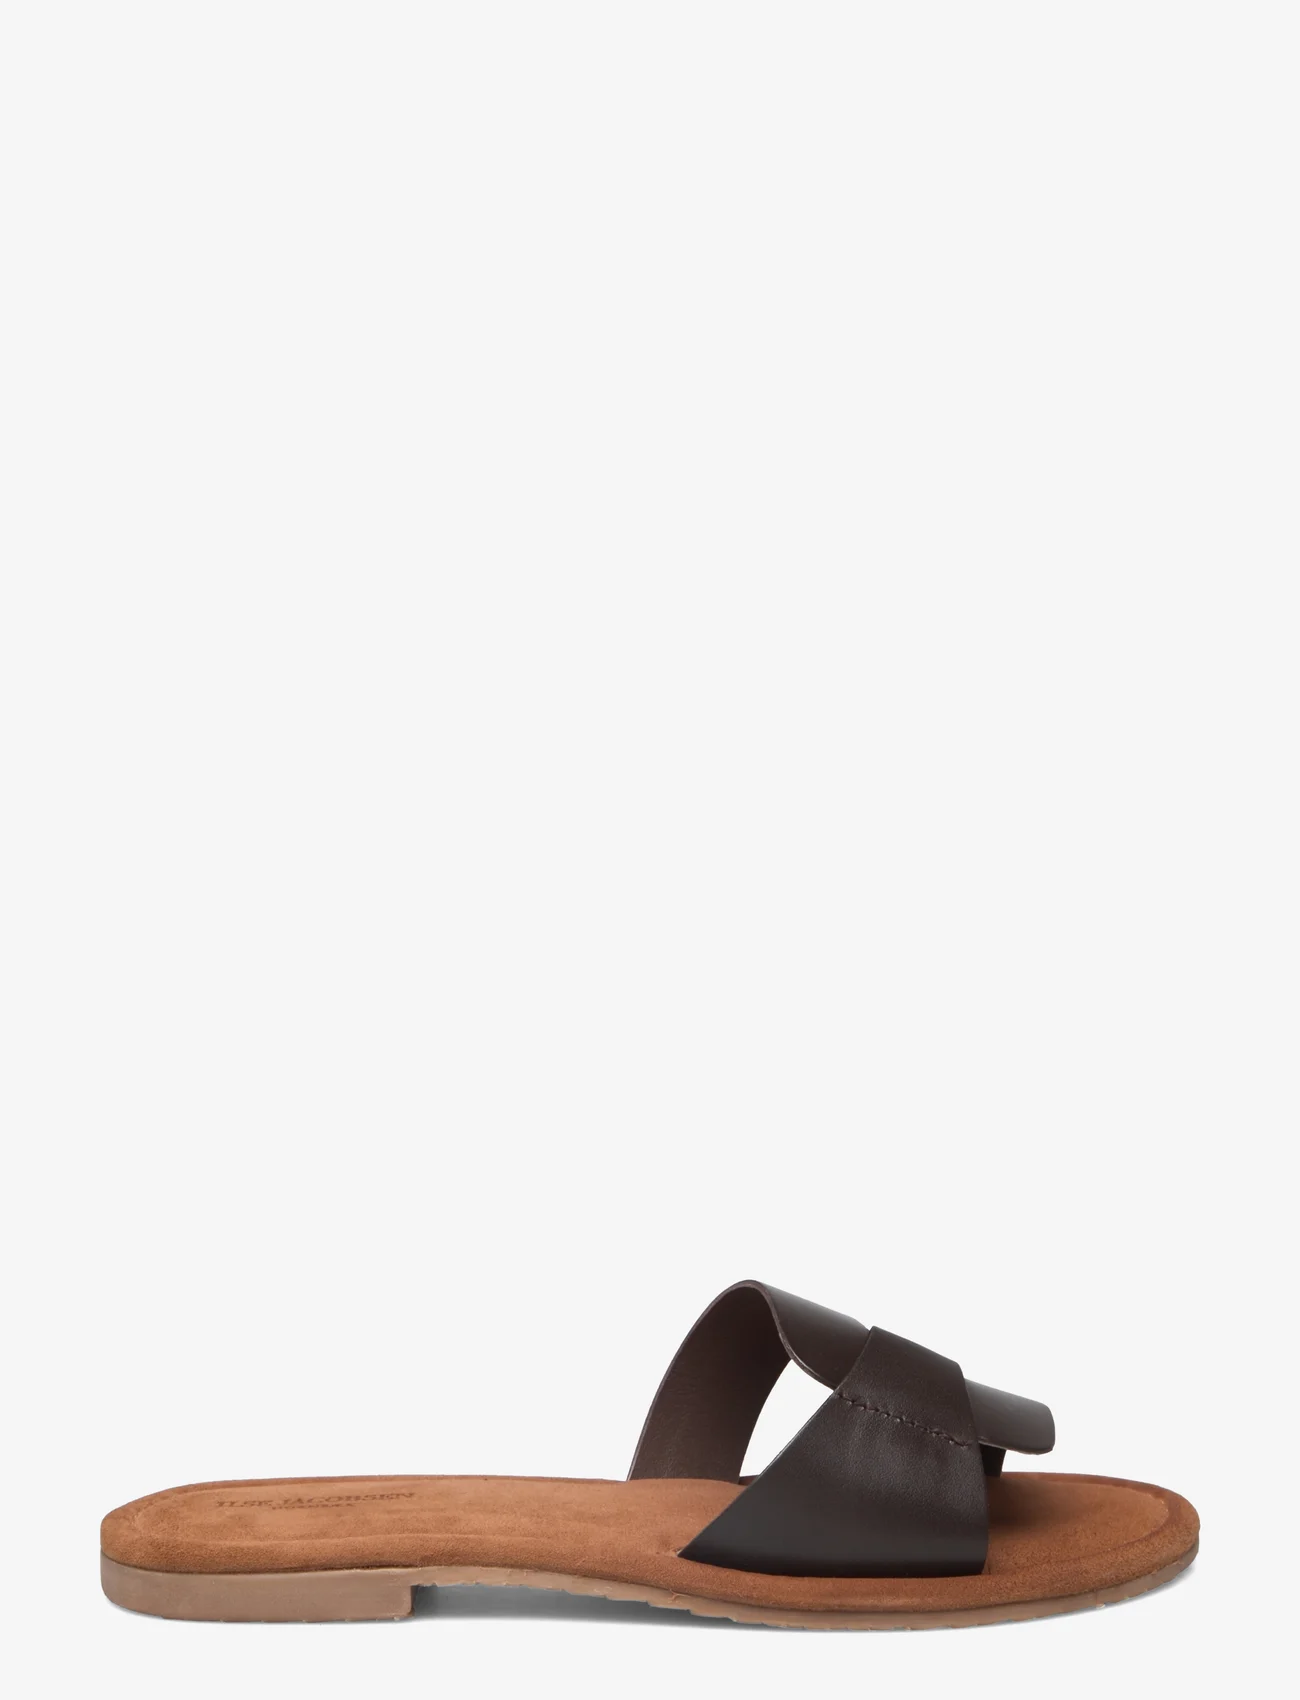 Ilse Jacobsen - Leather Sandal - matalat sandaalit - 239 bison - 1